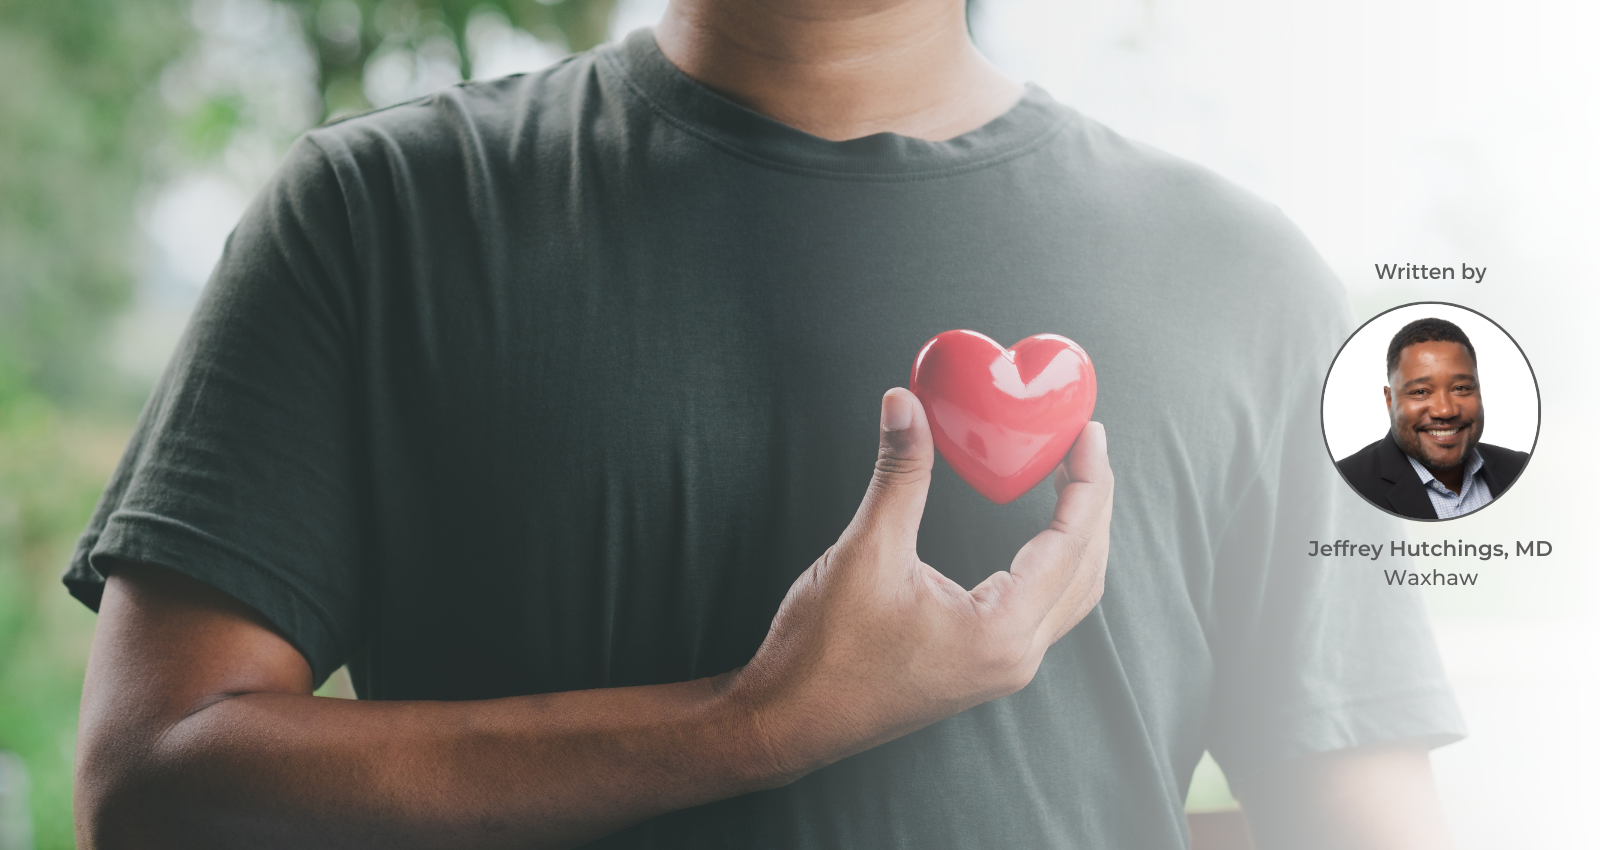 Myth Busting: Can Our Hearts Really Break?, Health Hub, Healthy News Blog